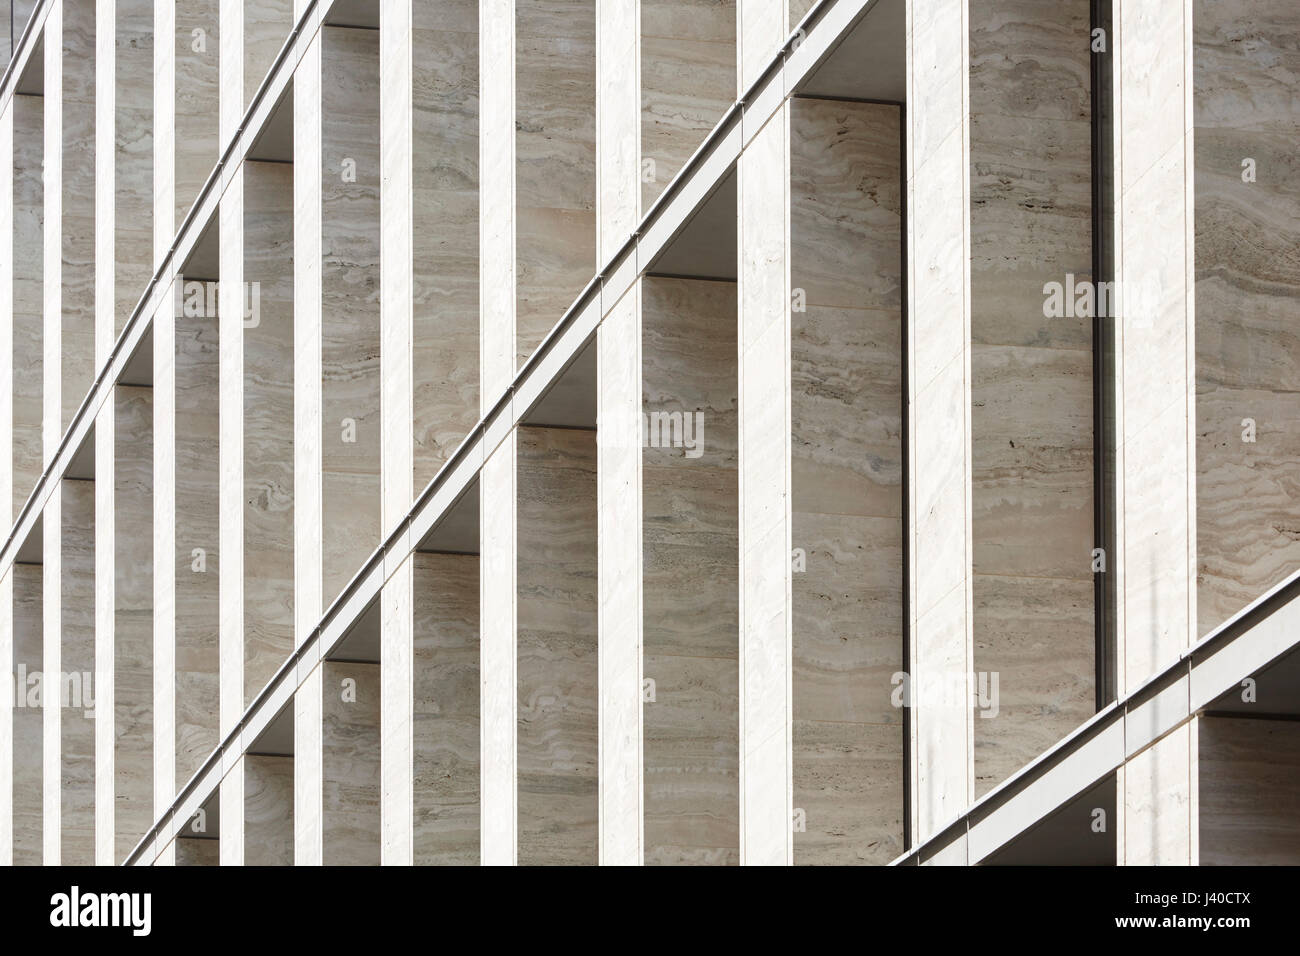 Perspektive entlang Travertin Fassade. Chancery Lane, London, Vereinigtes Königreich. Architekt: Bennetts Associates Architects, 2015. Stockfoto